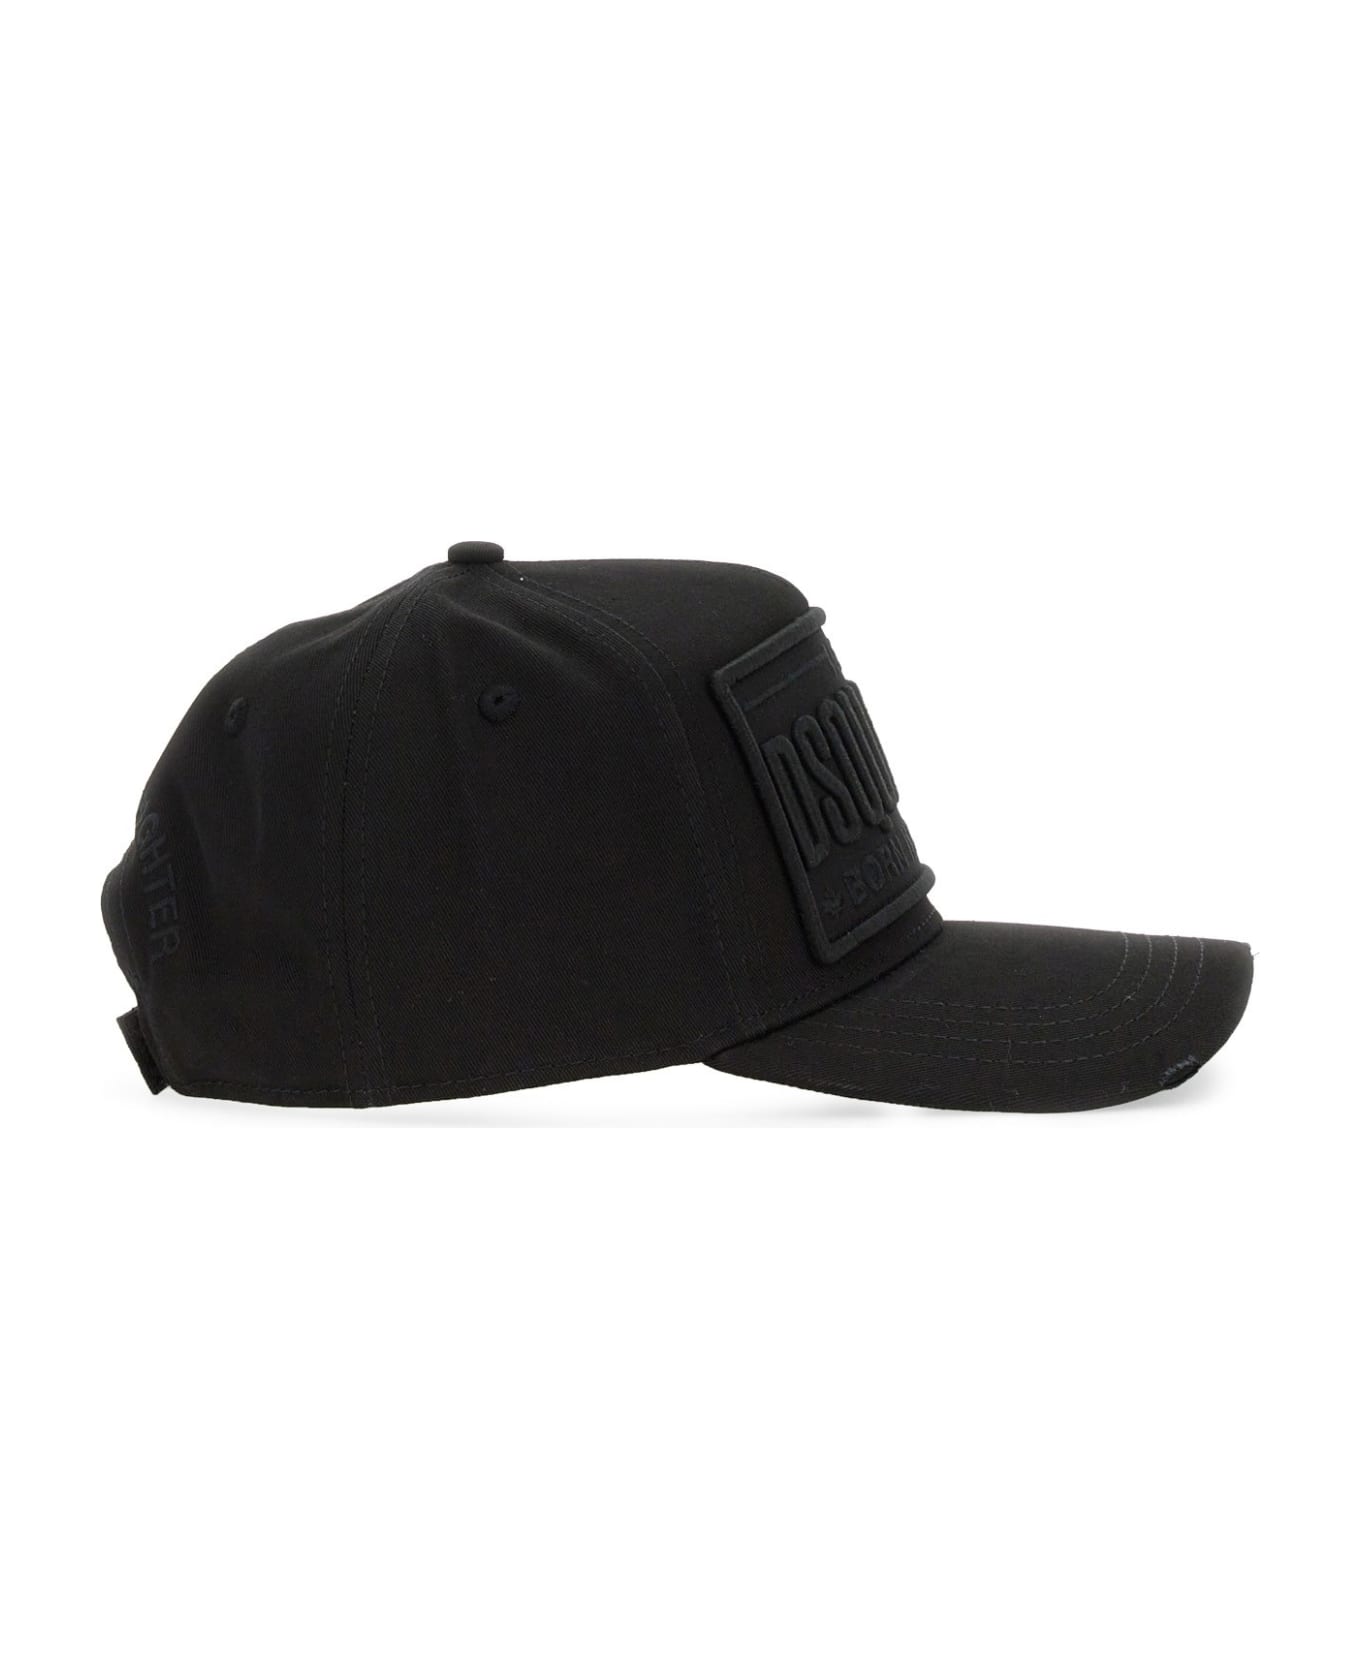 Dsquared2 Baseball Cap With Logo - NERO 帽子